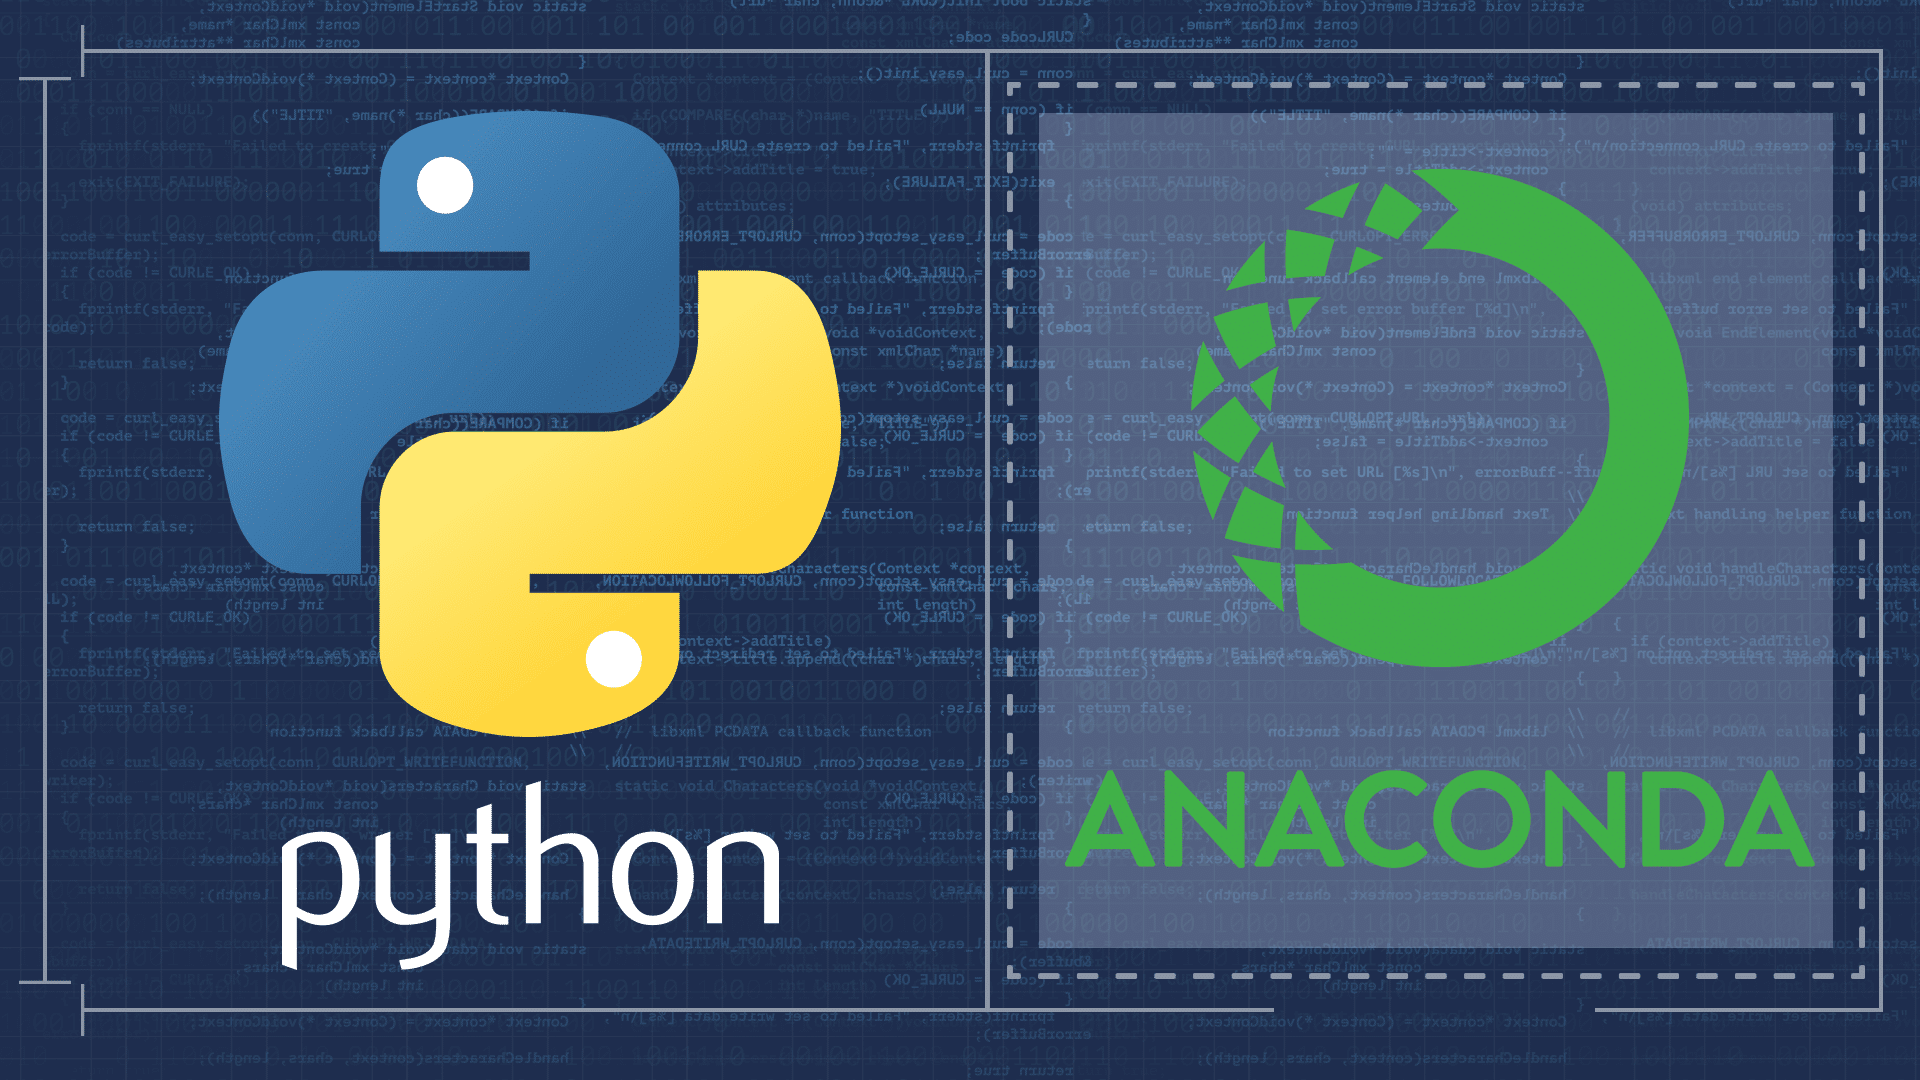 Anaconda for Python